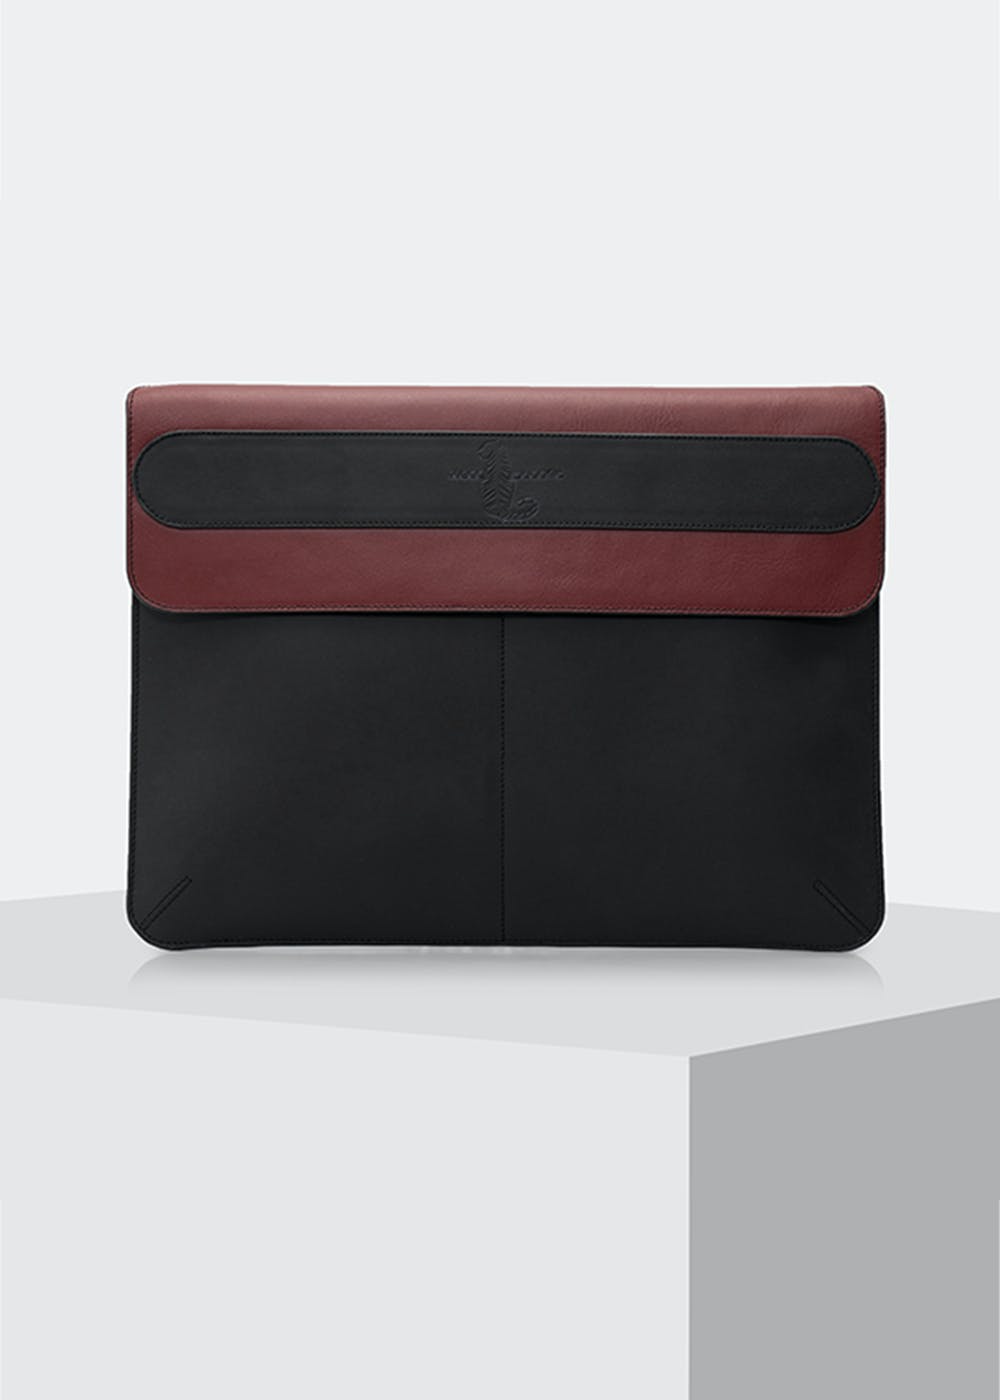 Contrast Flap Panel Detail Black Laptop Sleeve